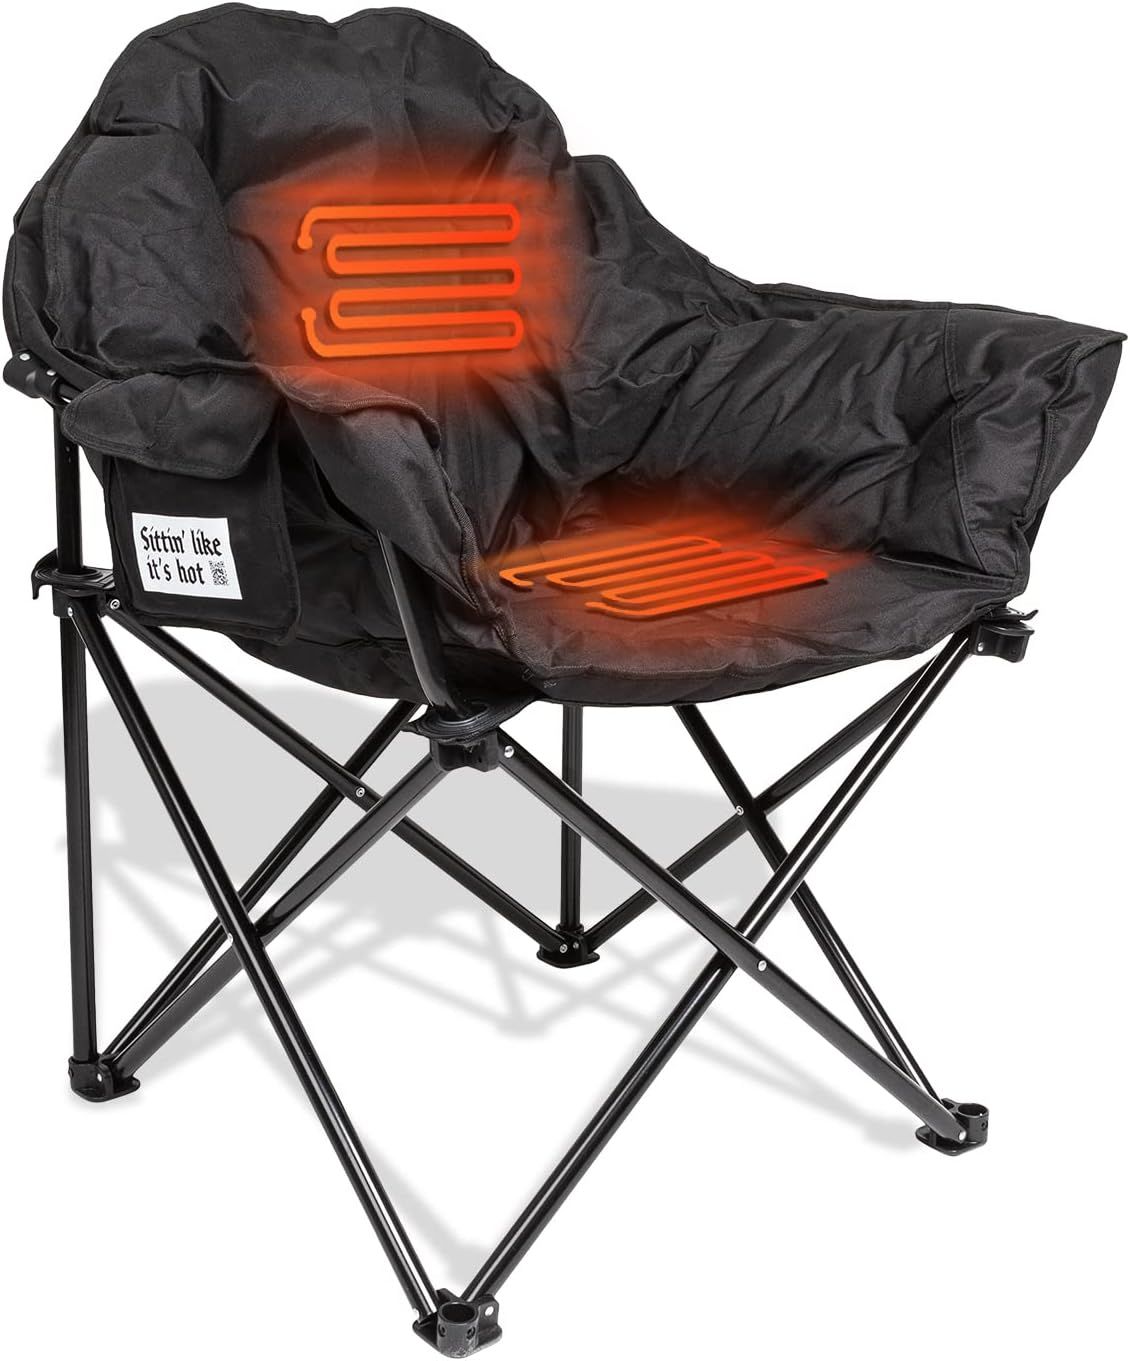 Sitting Like its hot Heated Camping Chair - Sittin Like its hot | Amazon (US)